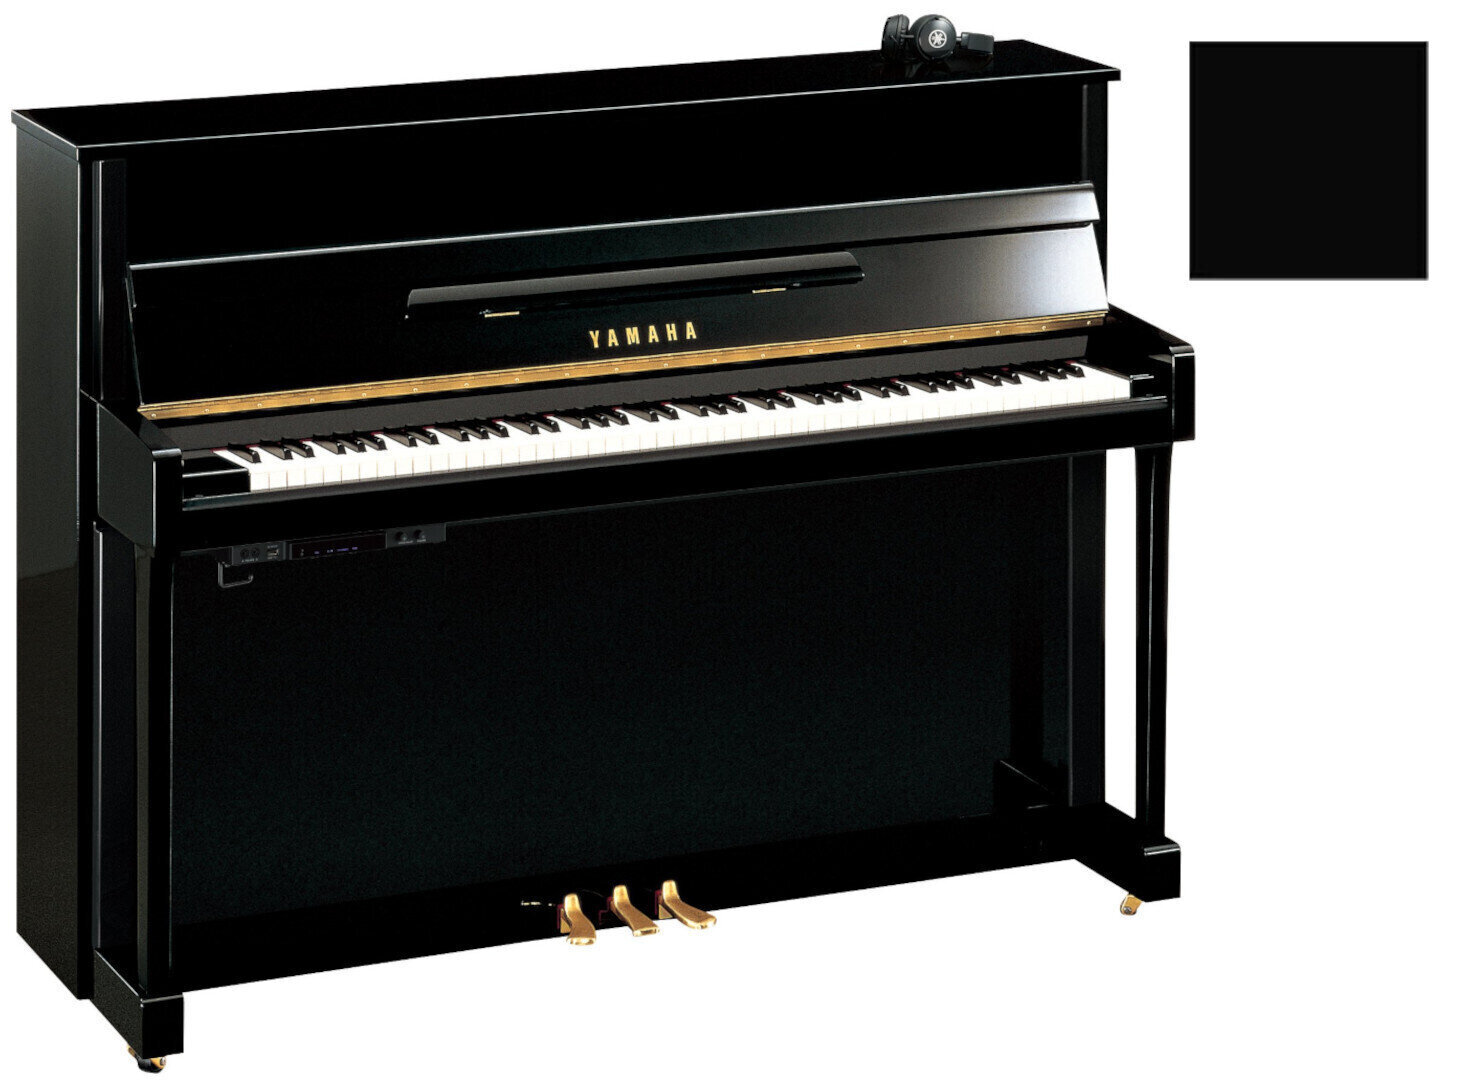 Piano Yamaha B2 SC2 Silent Piano Polished Ebony with Chrome